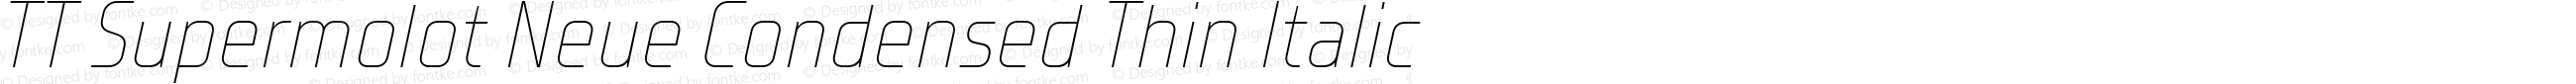 TT Supermolot Neue Condensed Thin Italic